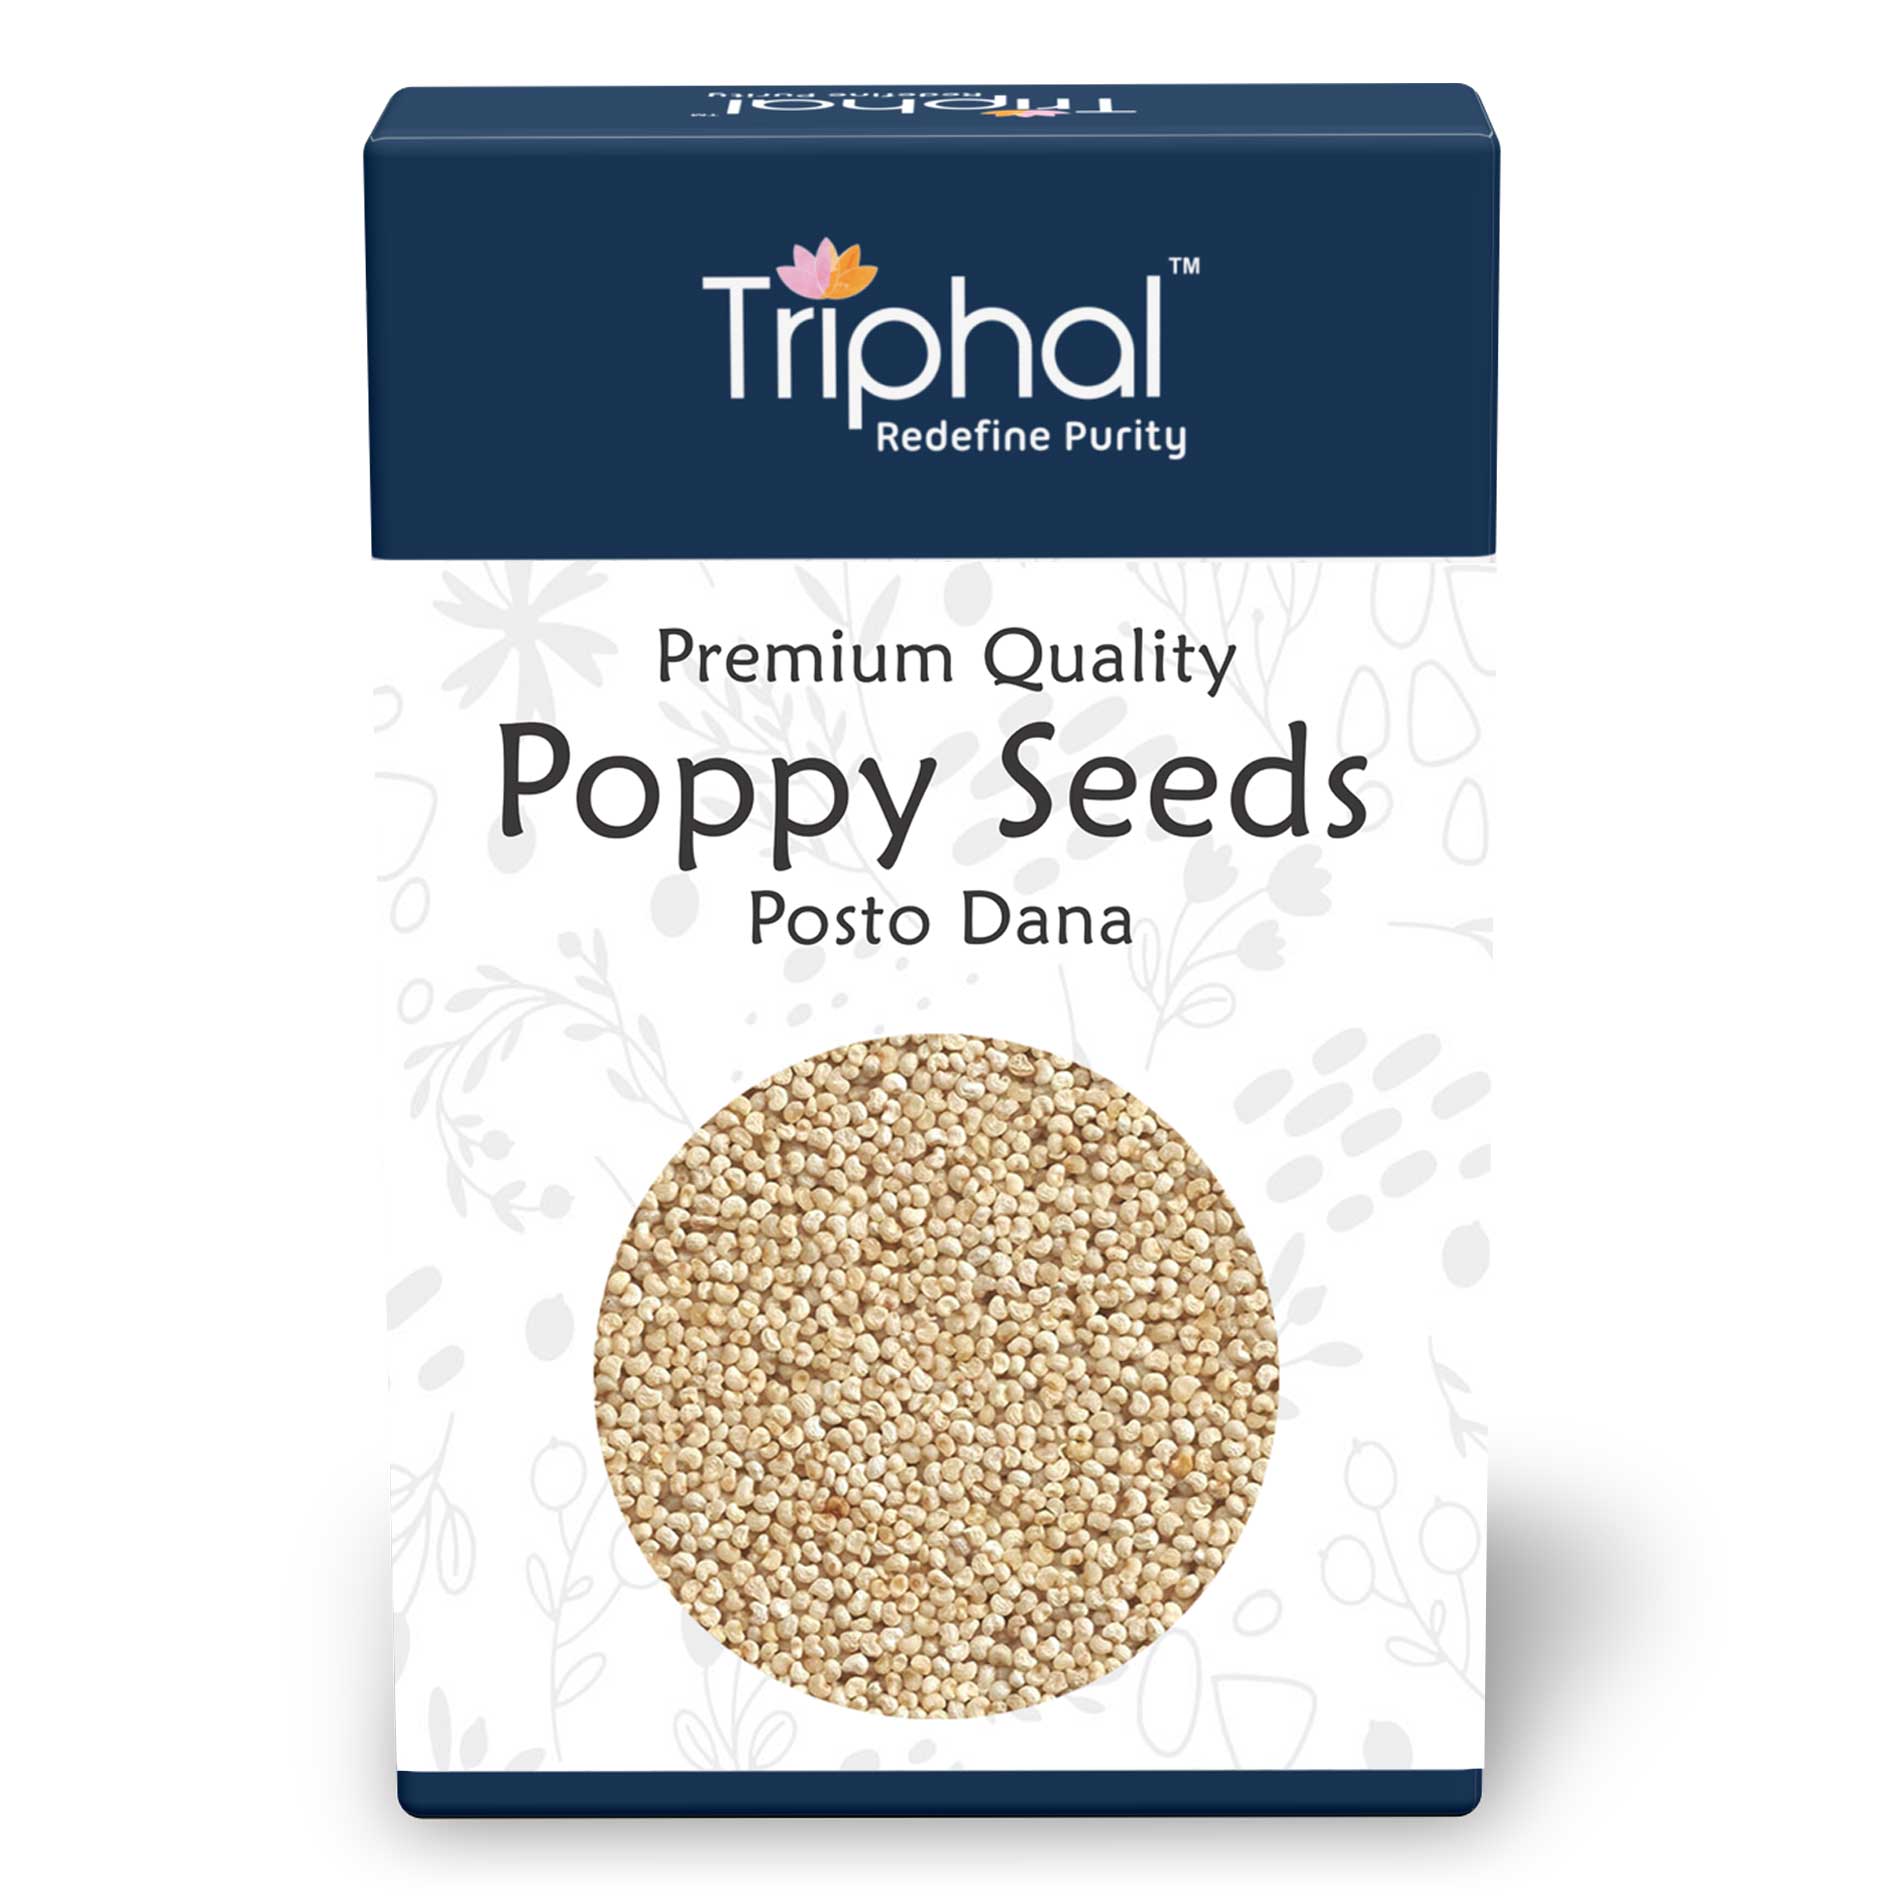 Buy Poppy Seeds or Khas Khas Online on Triphal